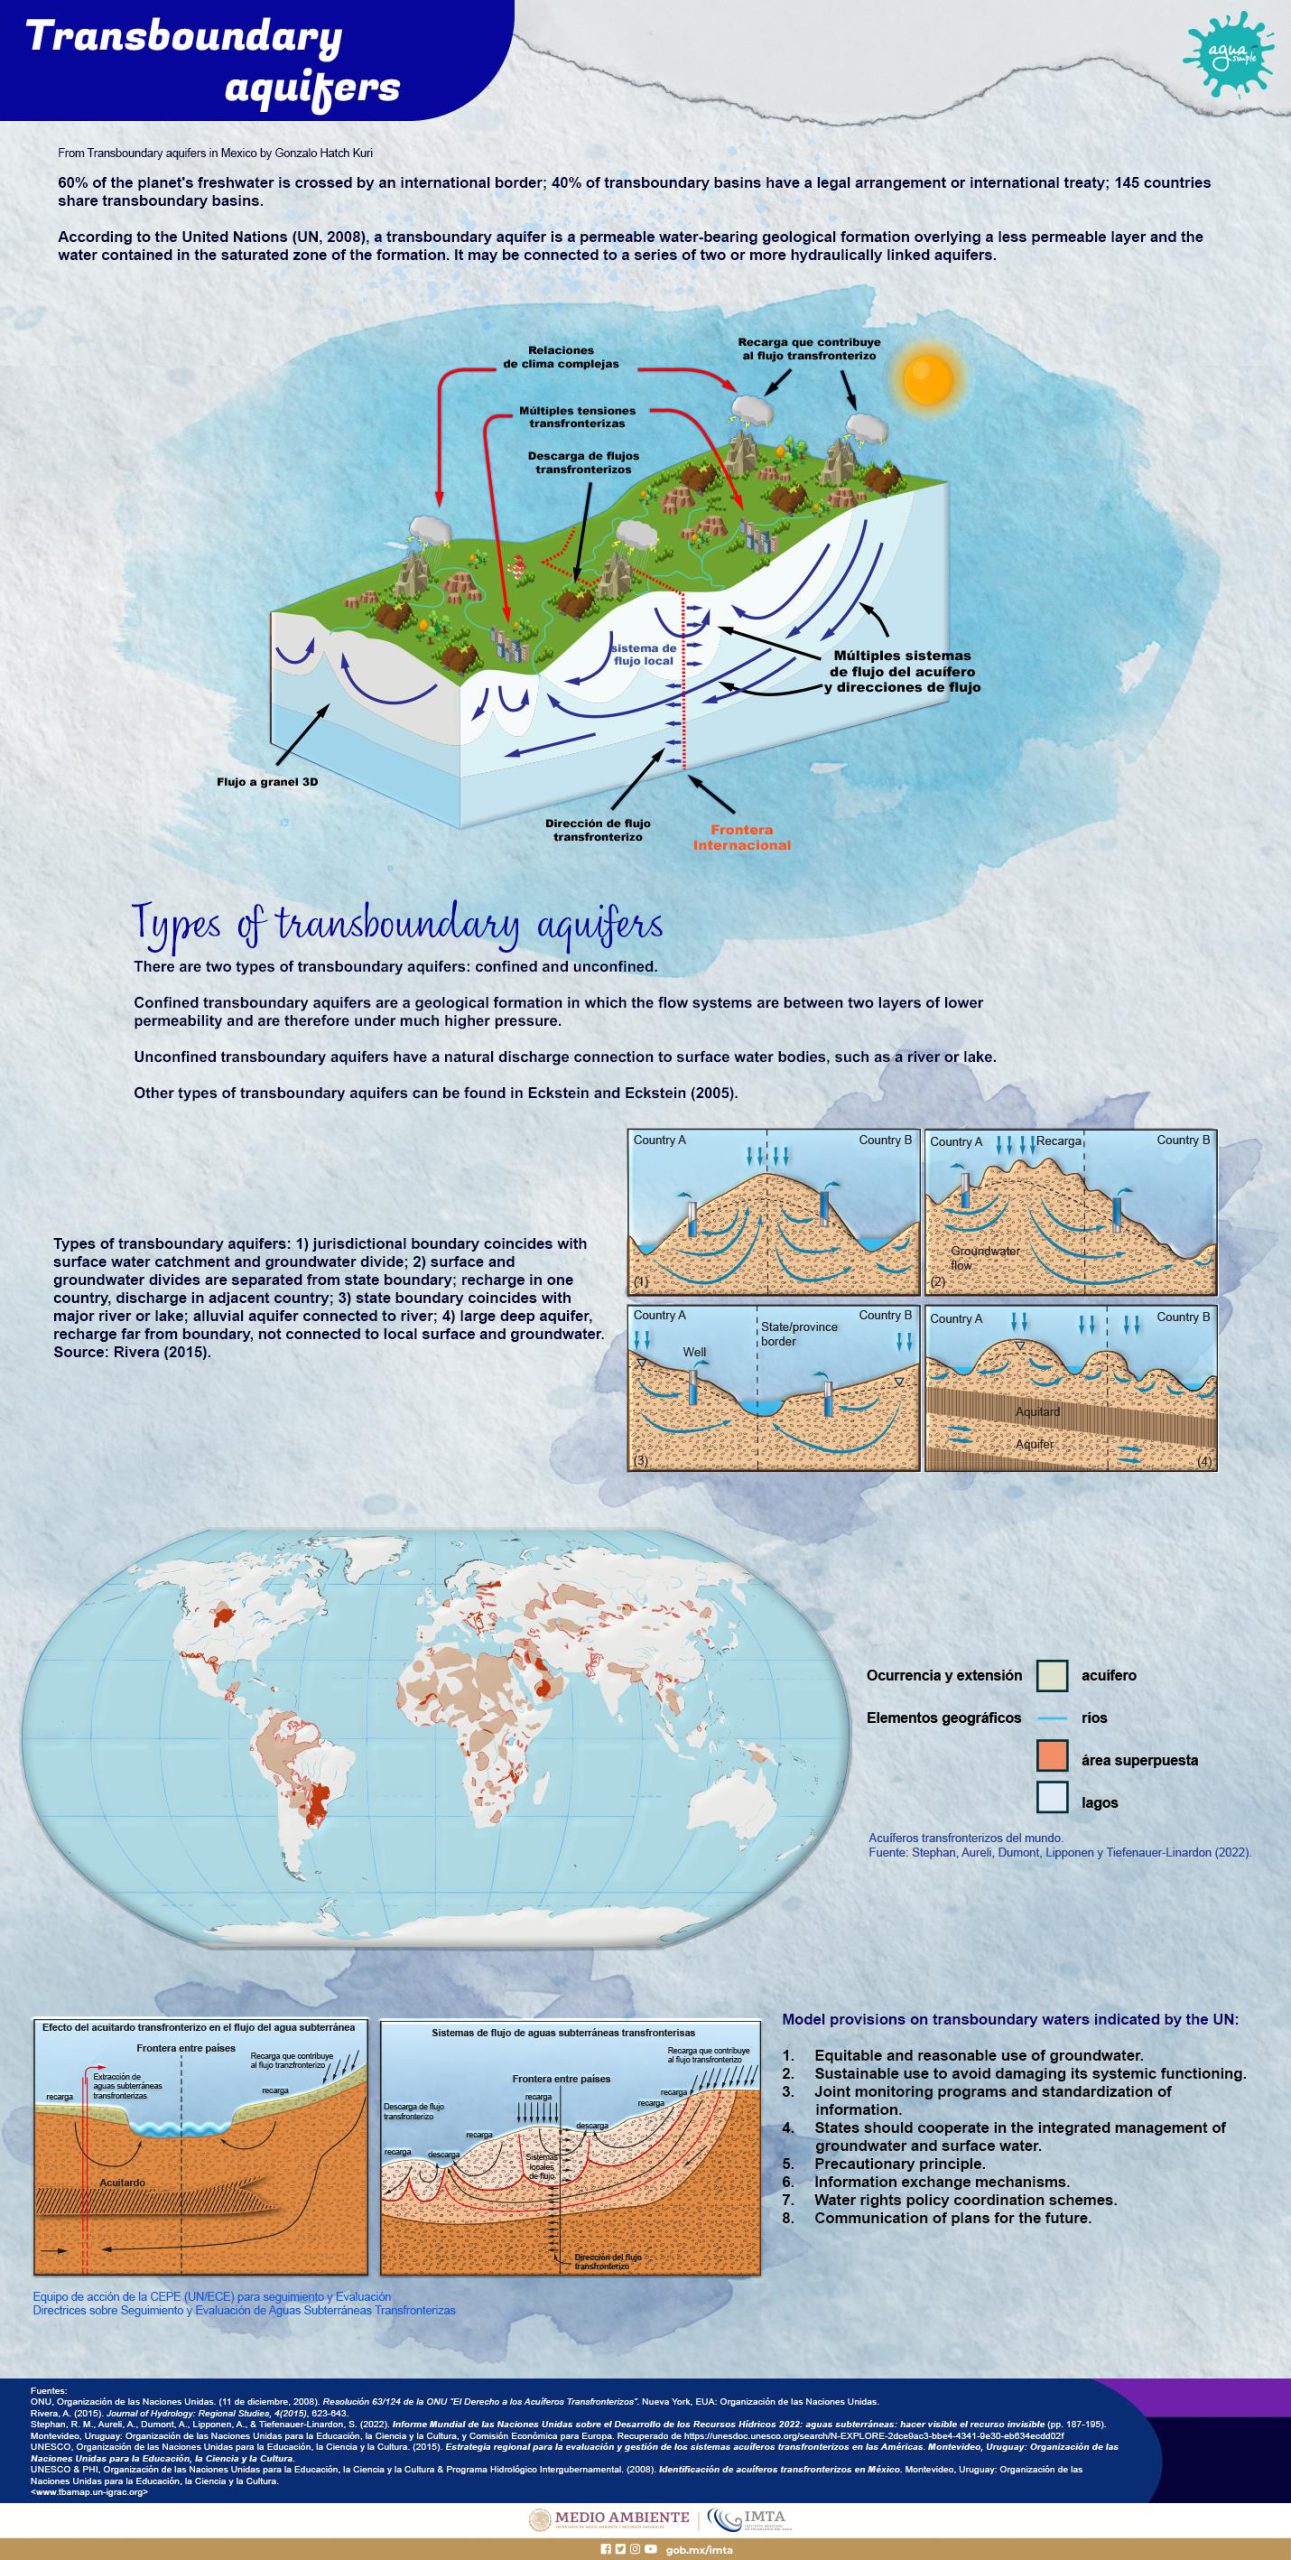 Transboundary aquifers